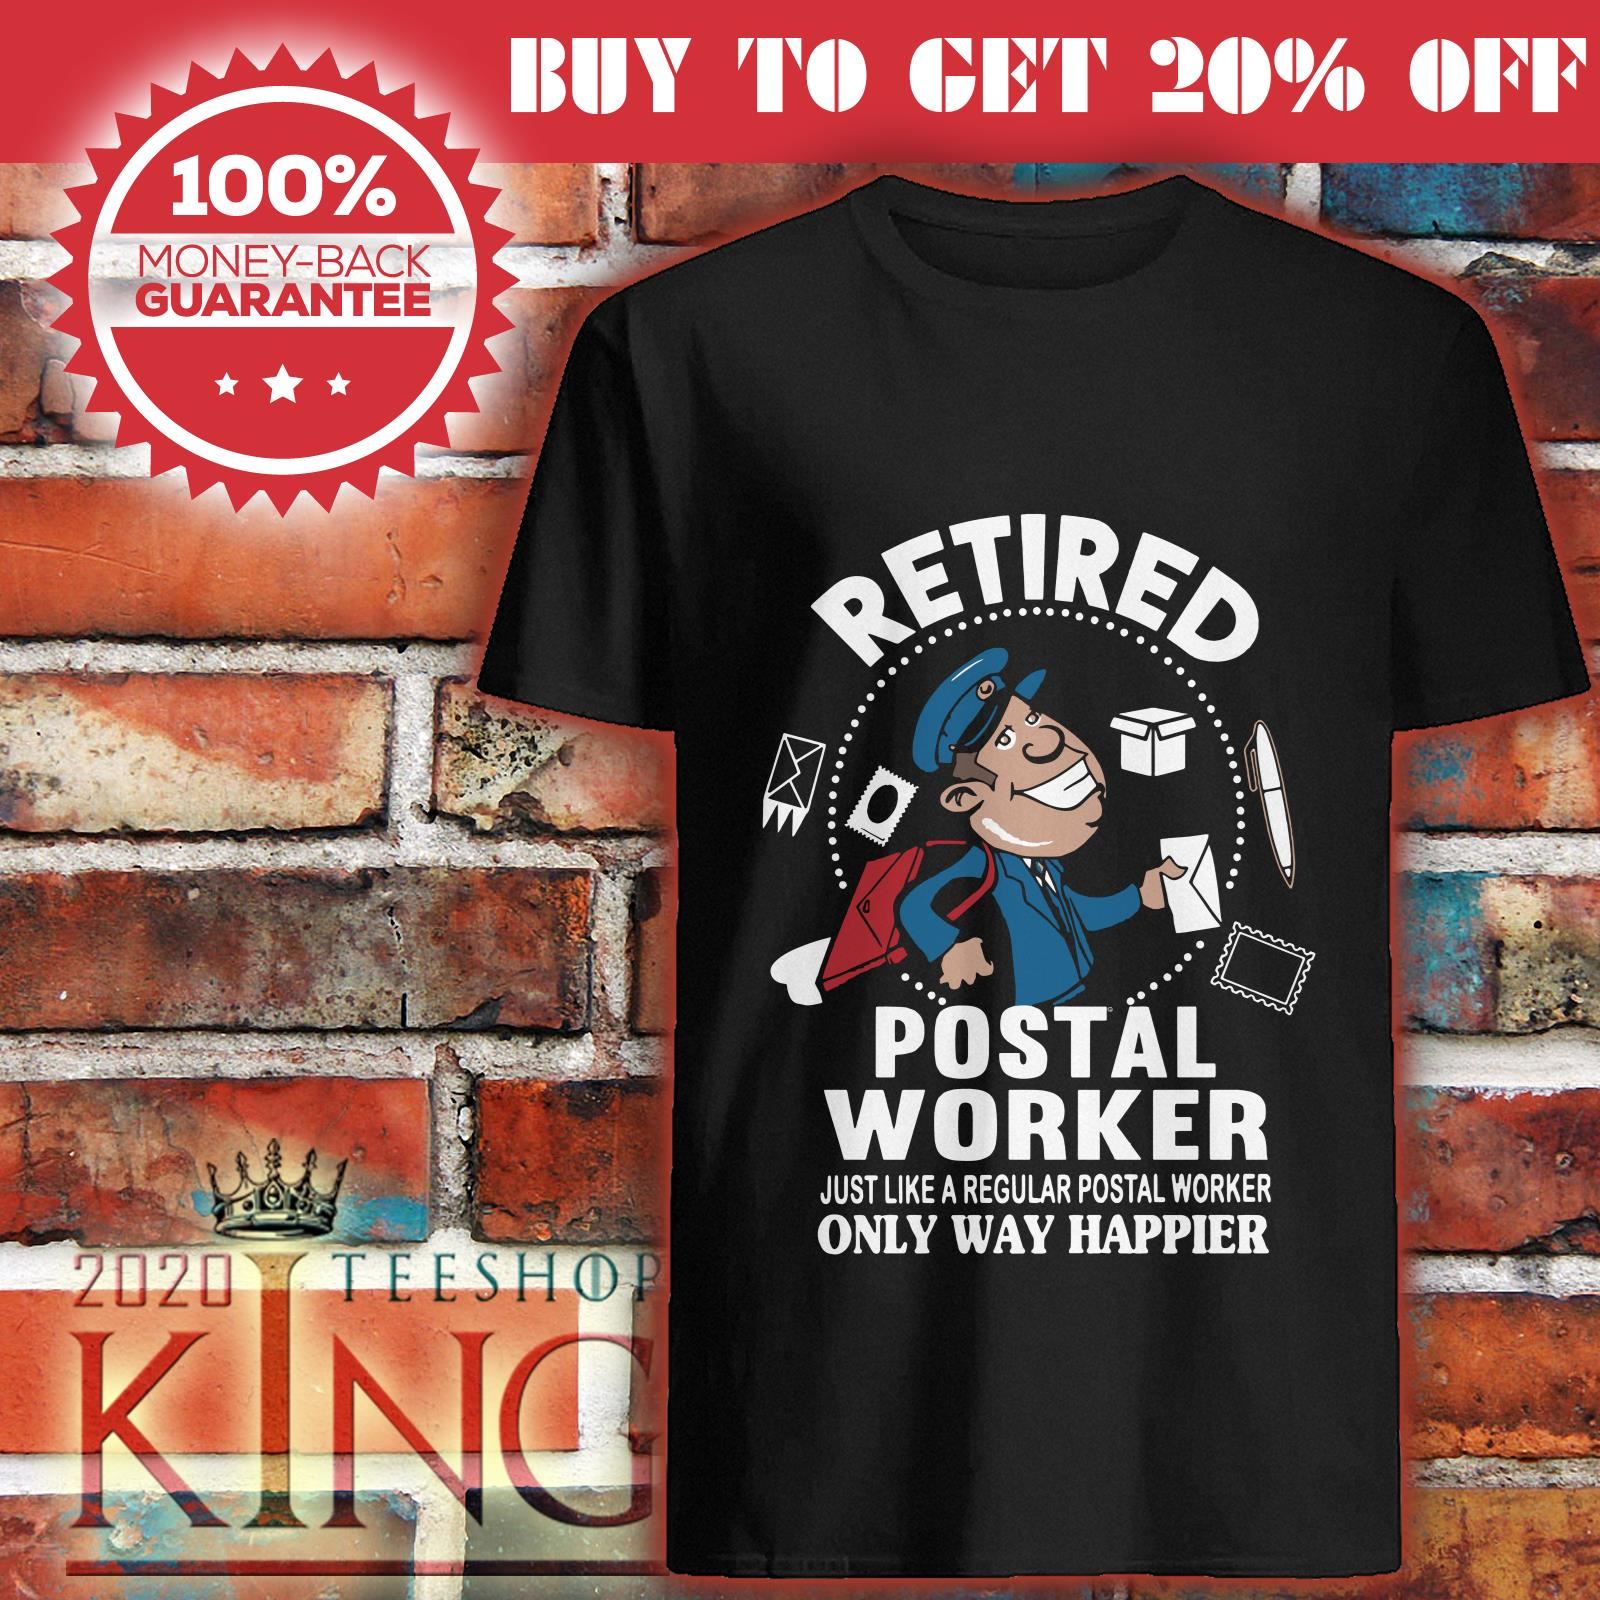 retired-postal-worker-only-way-happier-shirt.jpg